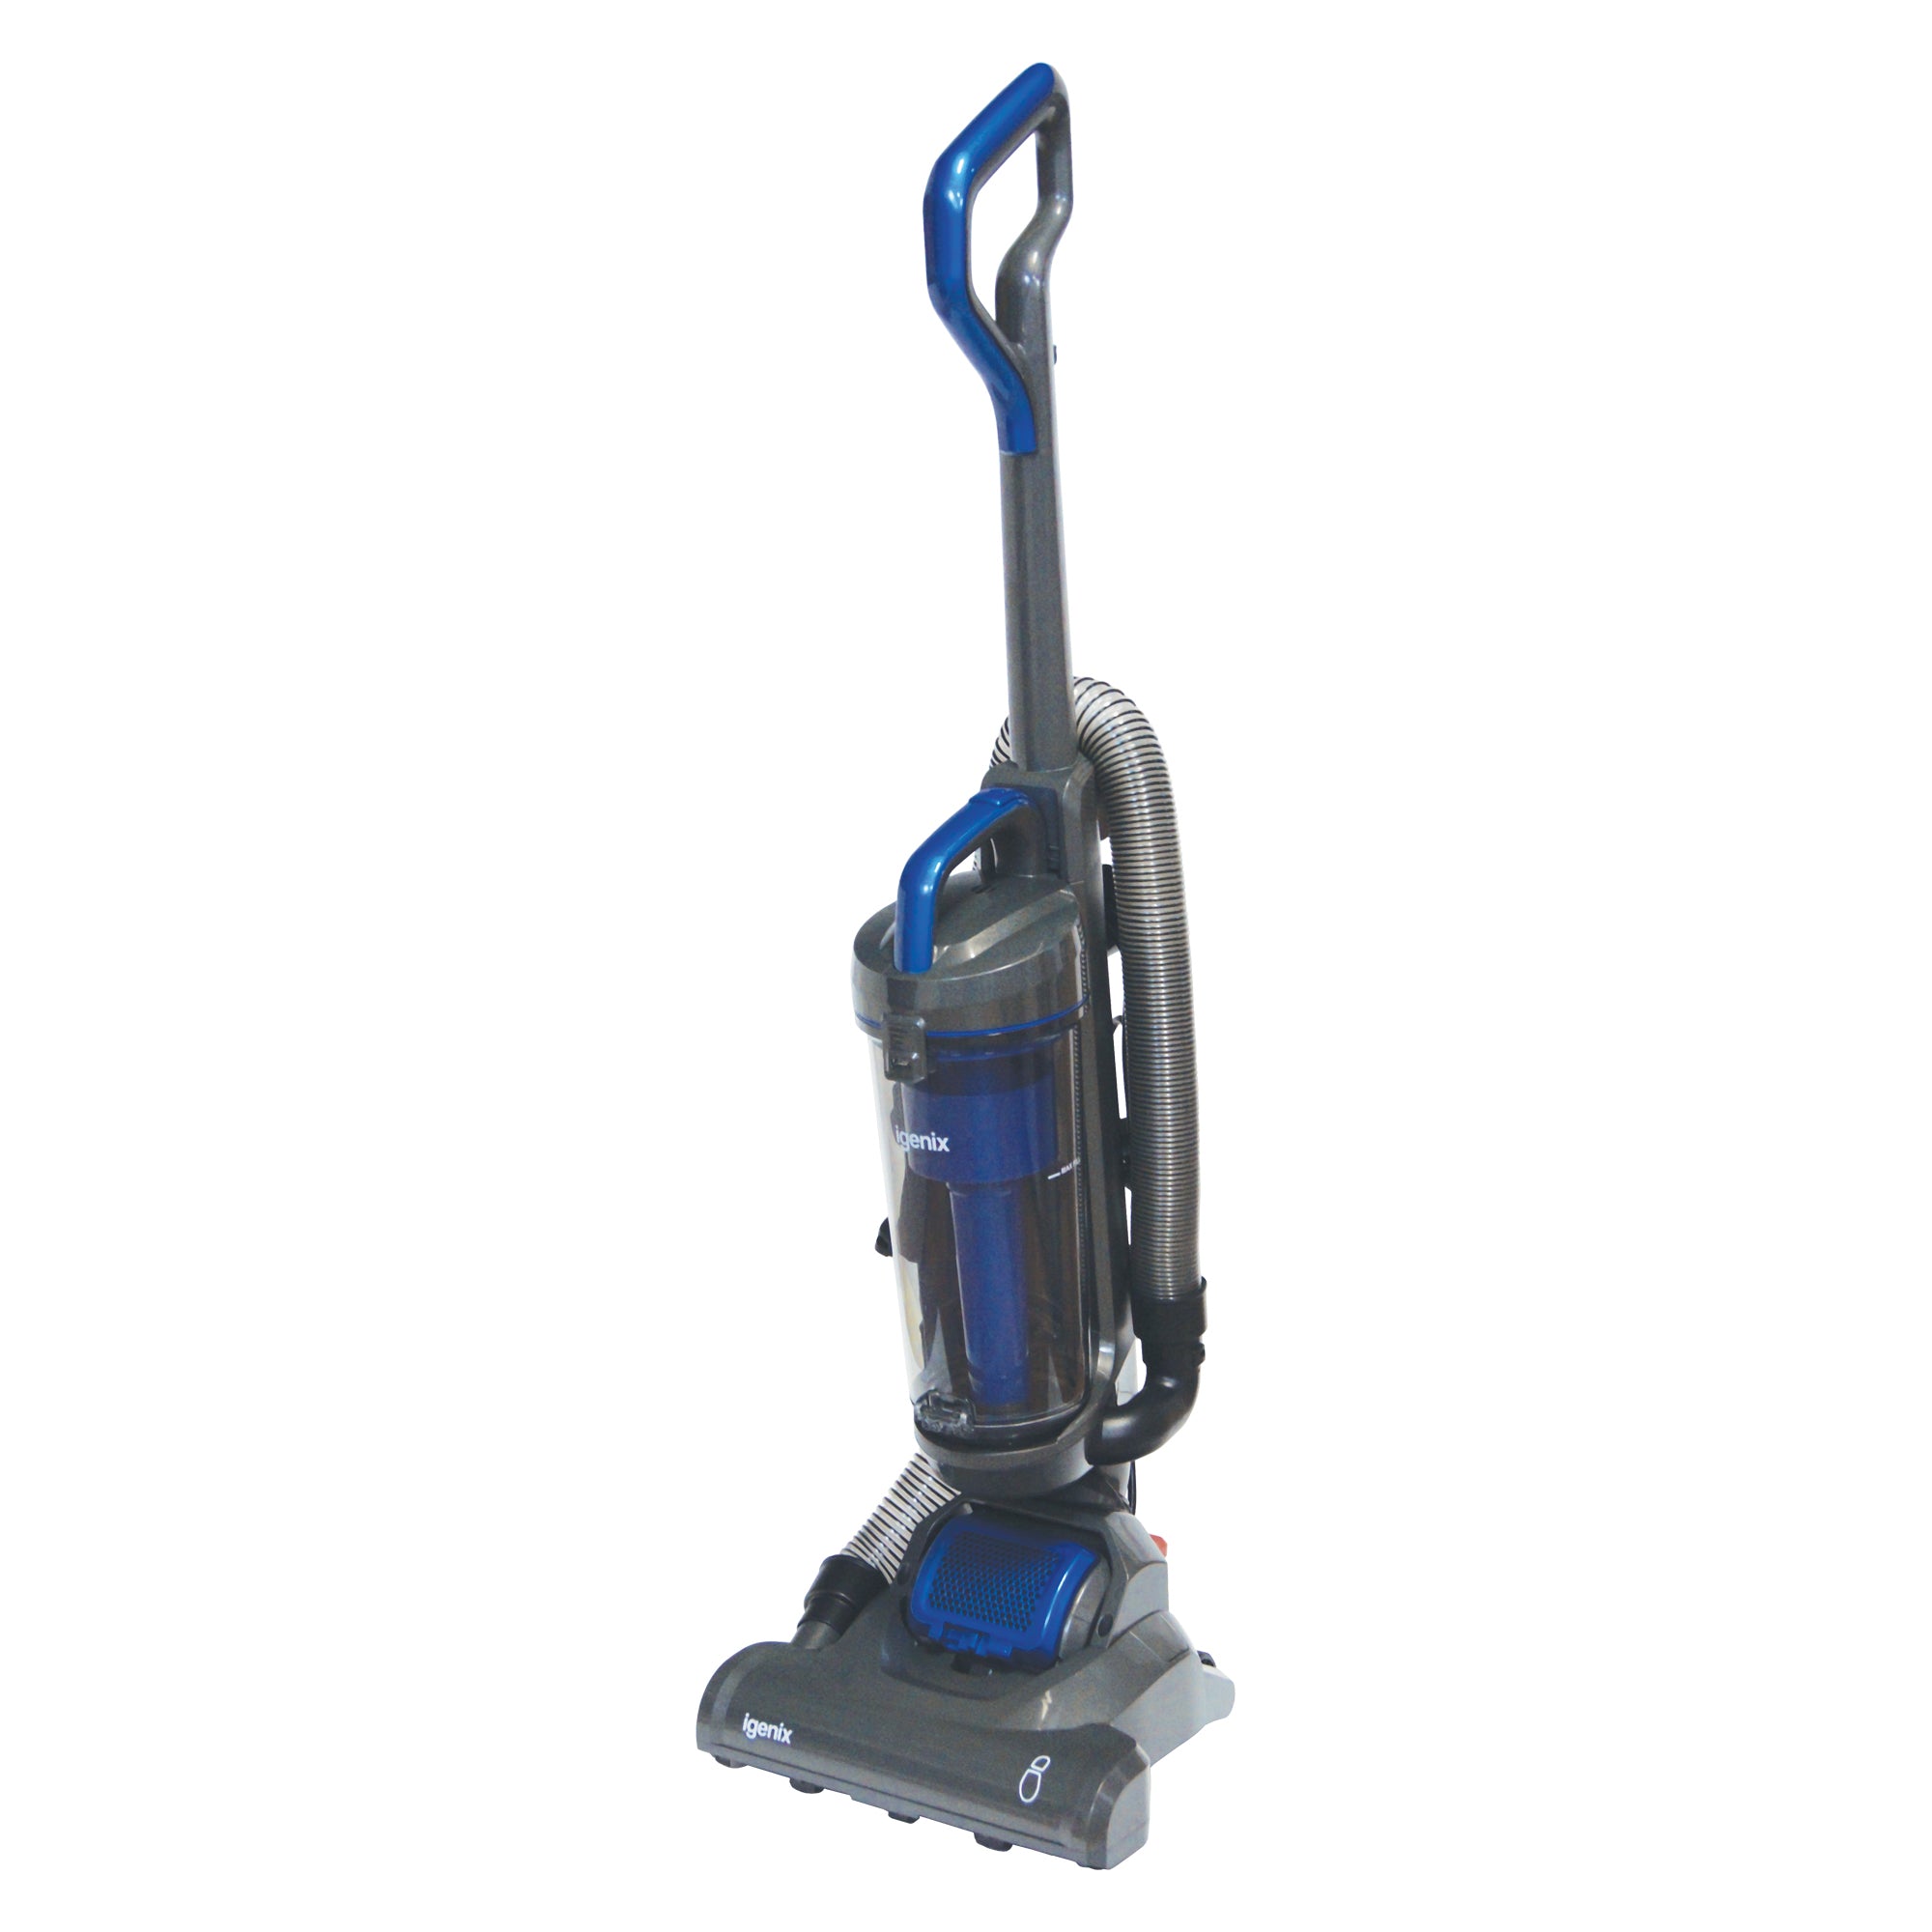 Upright Bagless Vacuum Cleaner, 3 Litre, 400W, Grey/Blue